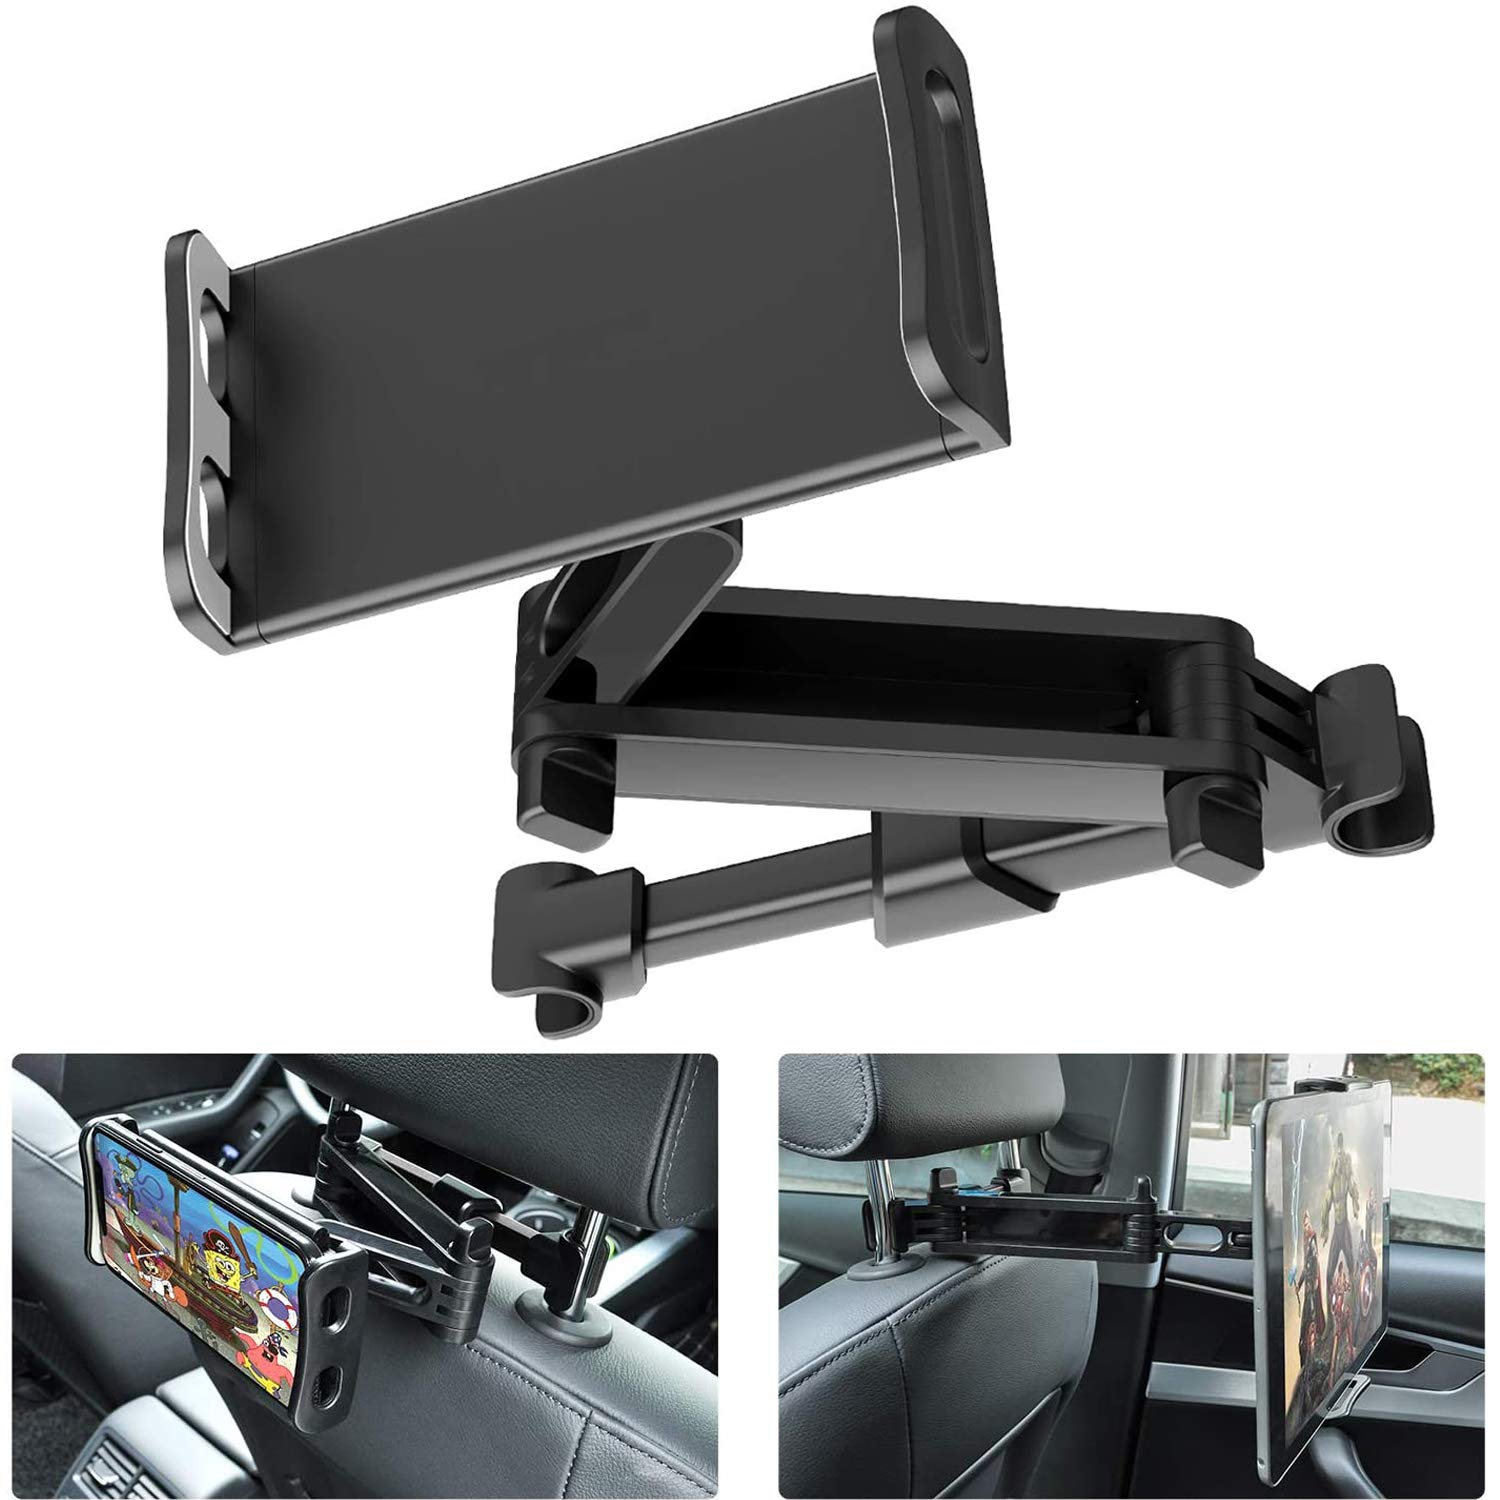 Jangebot™ Car Headrest Phone/Tablet Holder